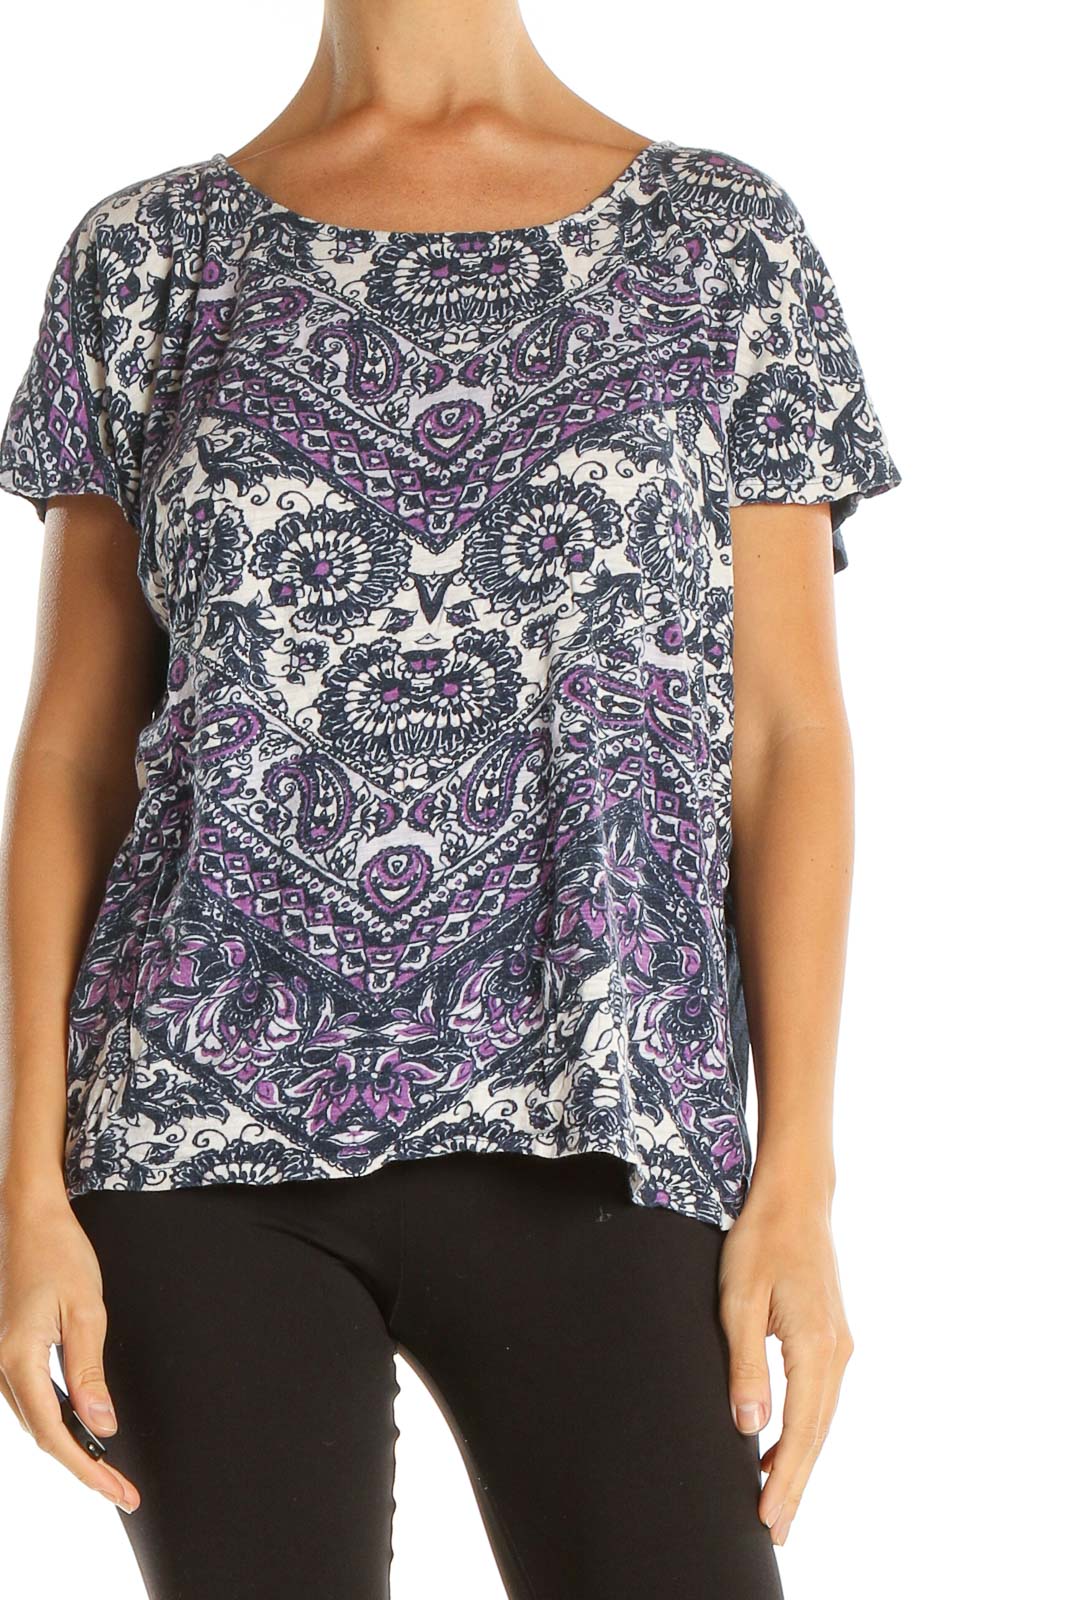 Purple Paisley Bohemian T-Shirt Front